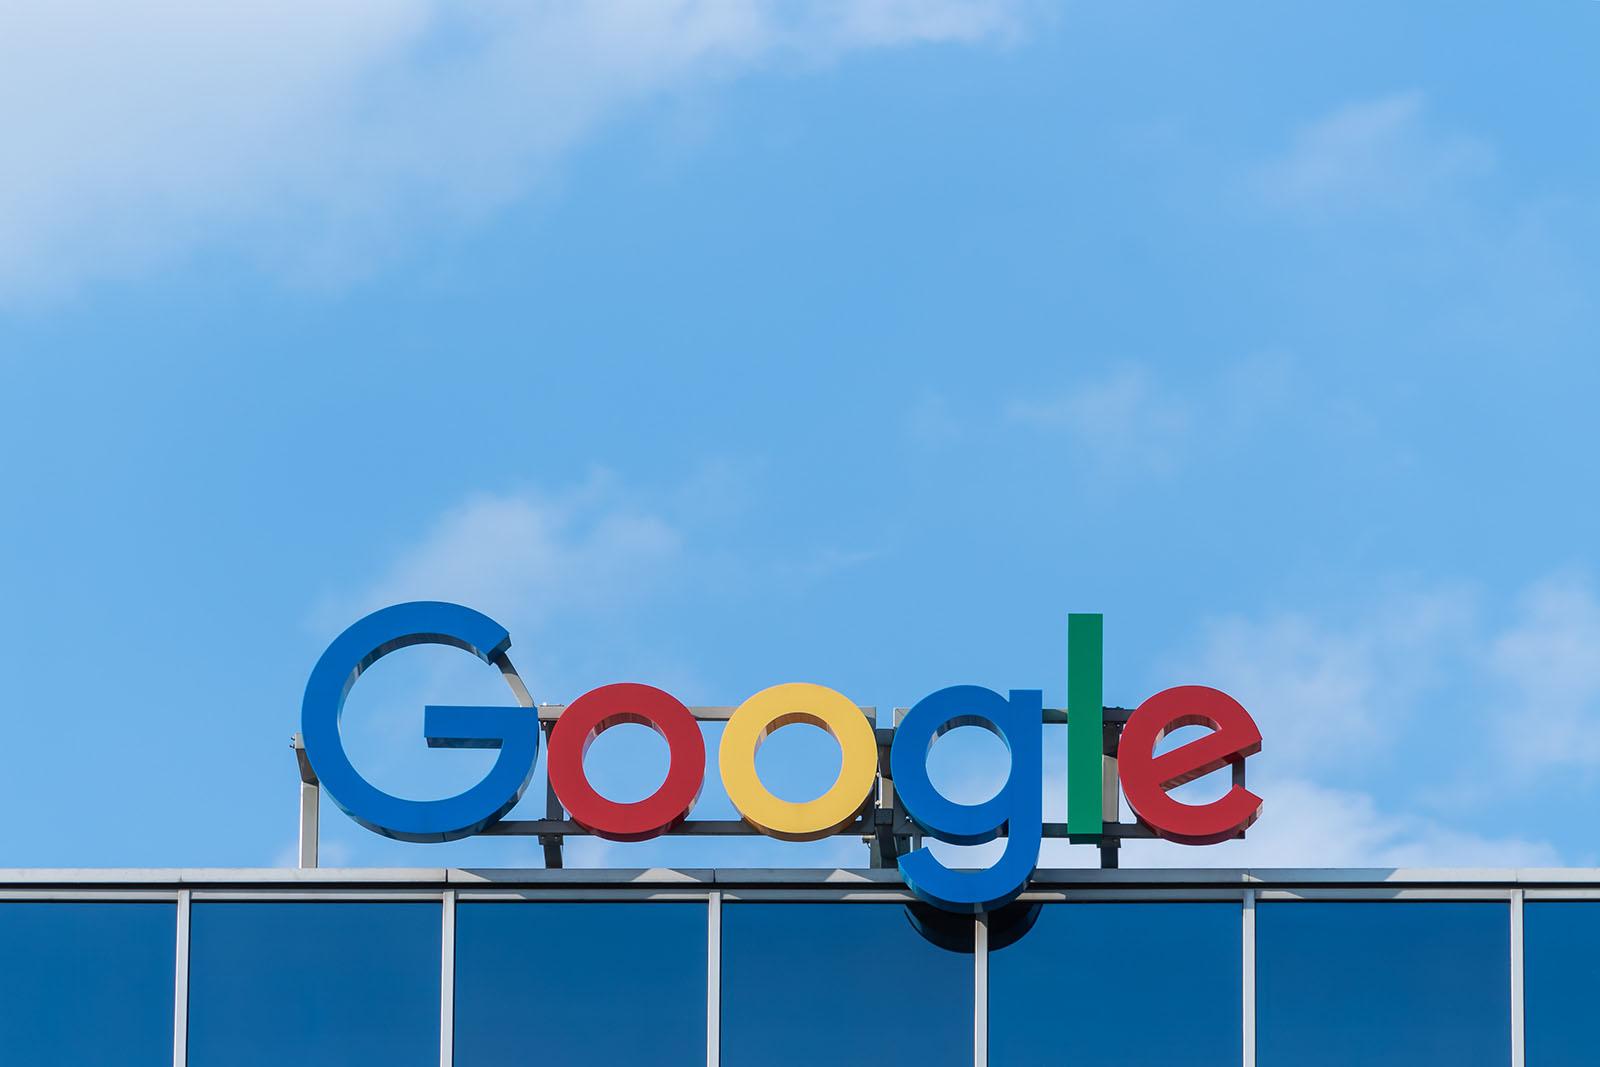 Google logo on top of a building - Image: https://unsplash.com/@pawel_czerwinski